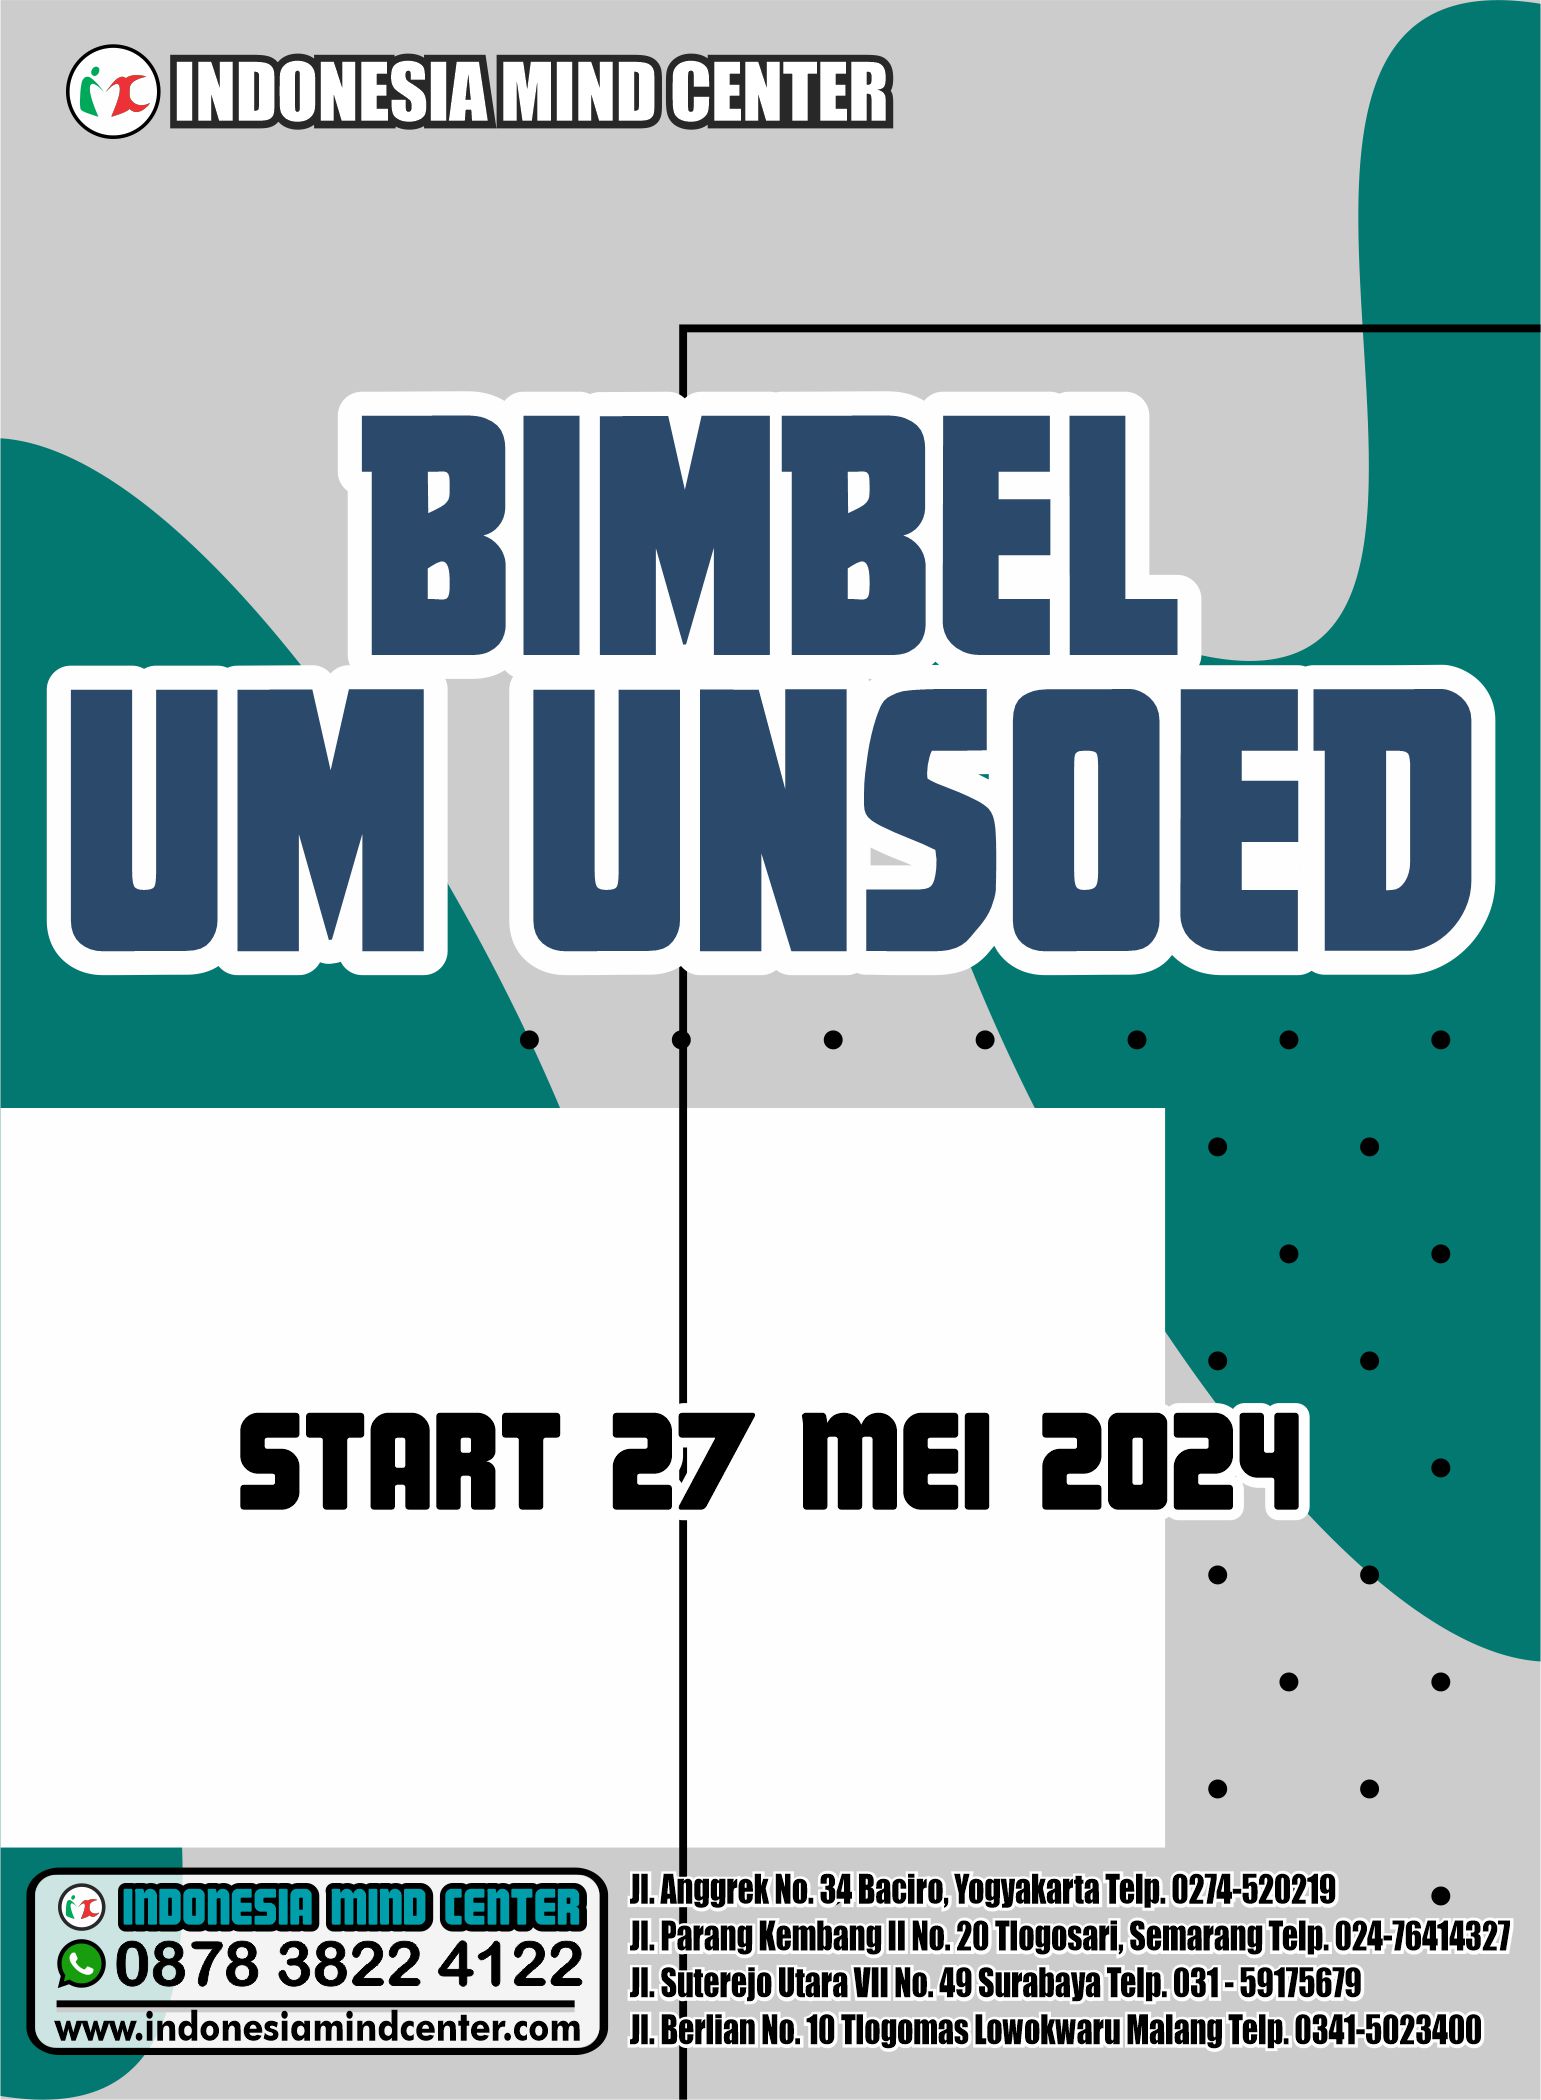 BIMBEL UM UNSOED START 27 MEI 2024